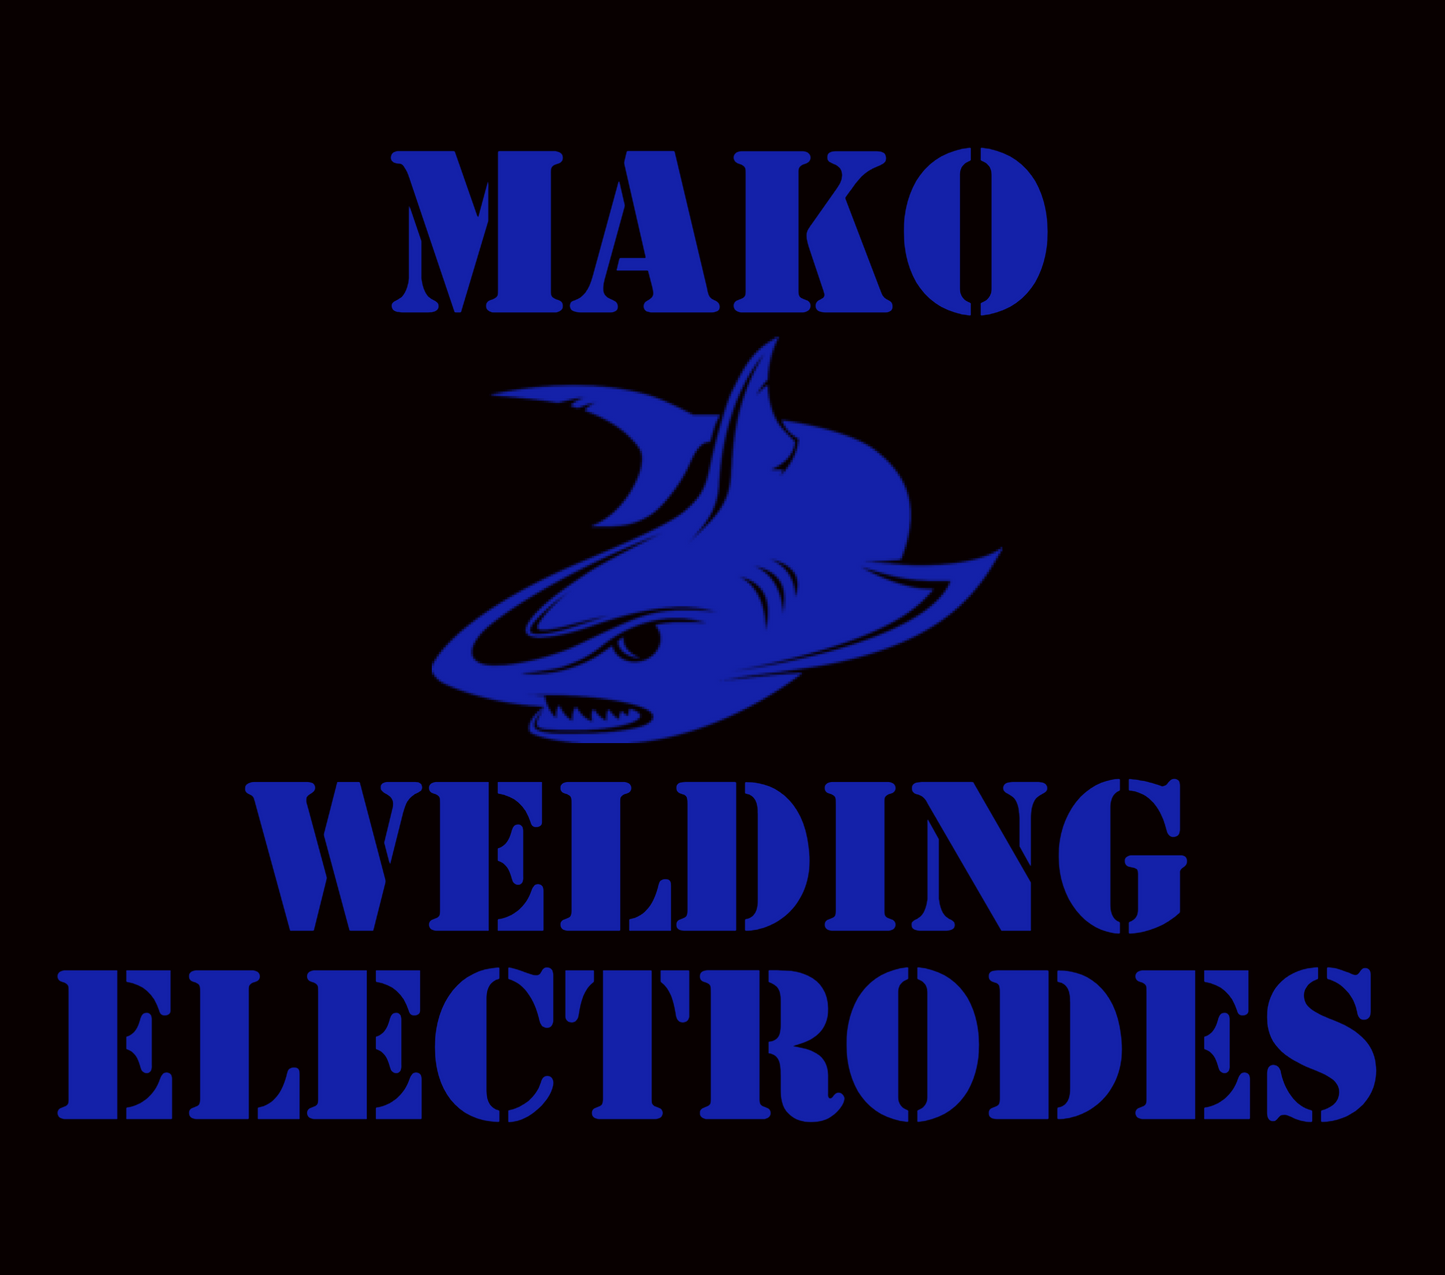 Mako Welding Electrodes